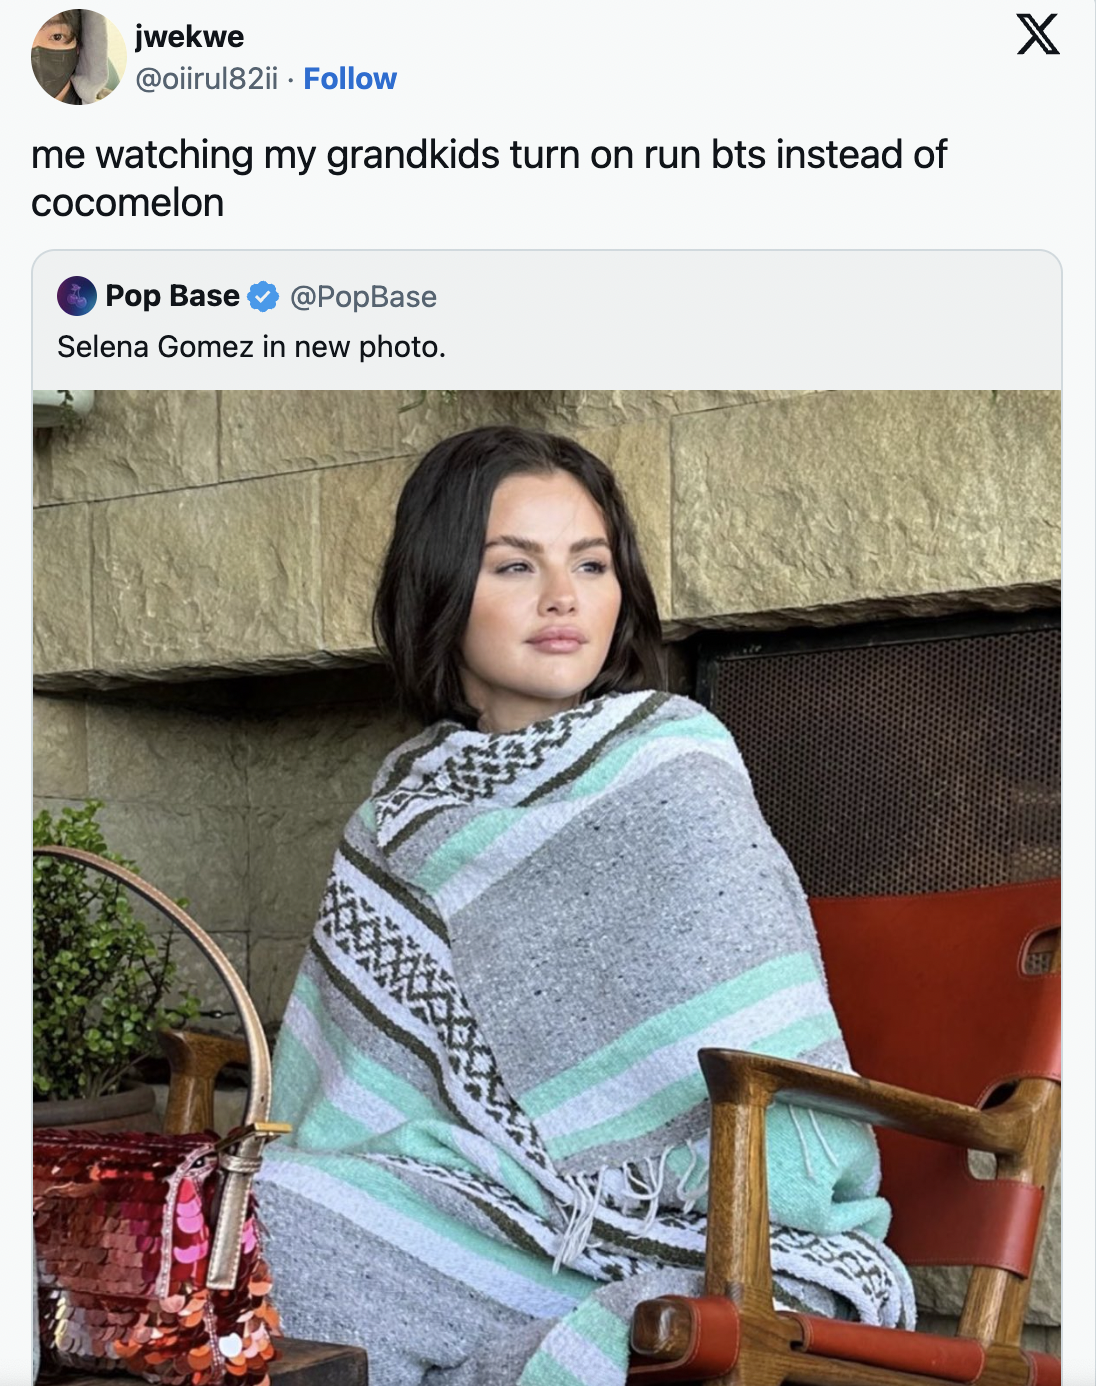 selena gomez in a blanket - material - jwekwe . me watching my grandkids turn on run bts instead of cocomelon Pop Base Selena Gomez in new photo. X